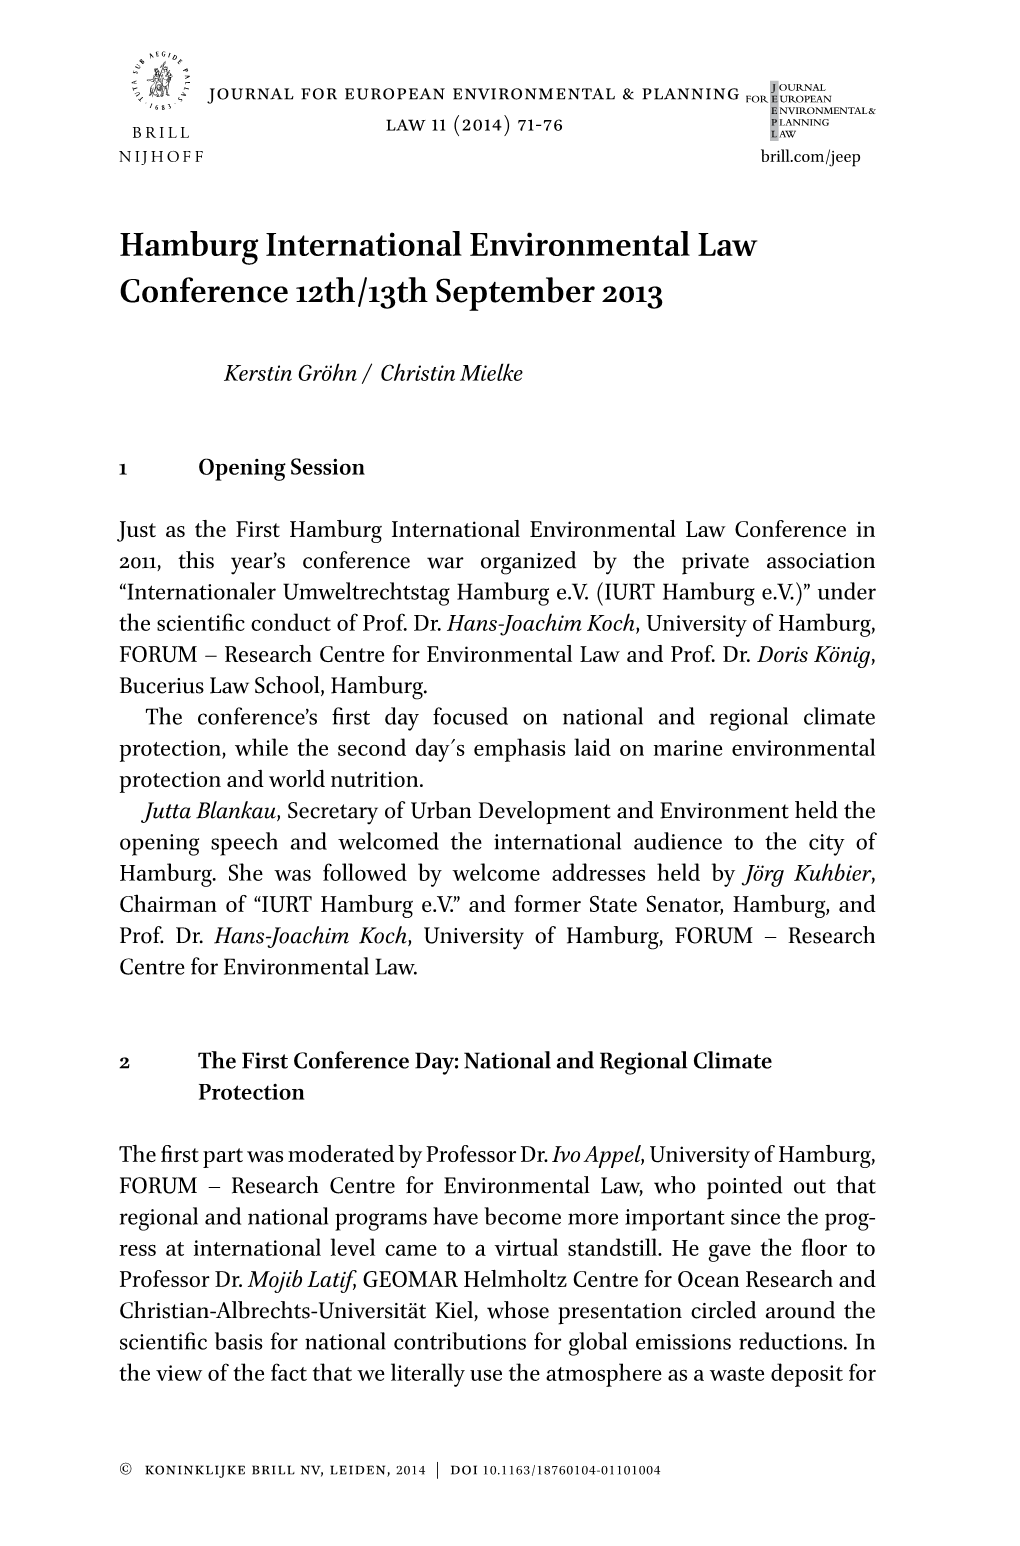 Hamburg International Environmental Law Conference 12Th/13Th September 2013